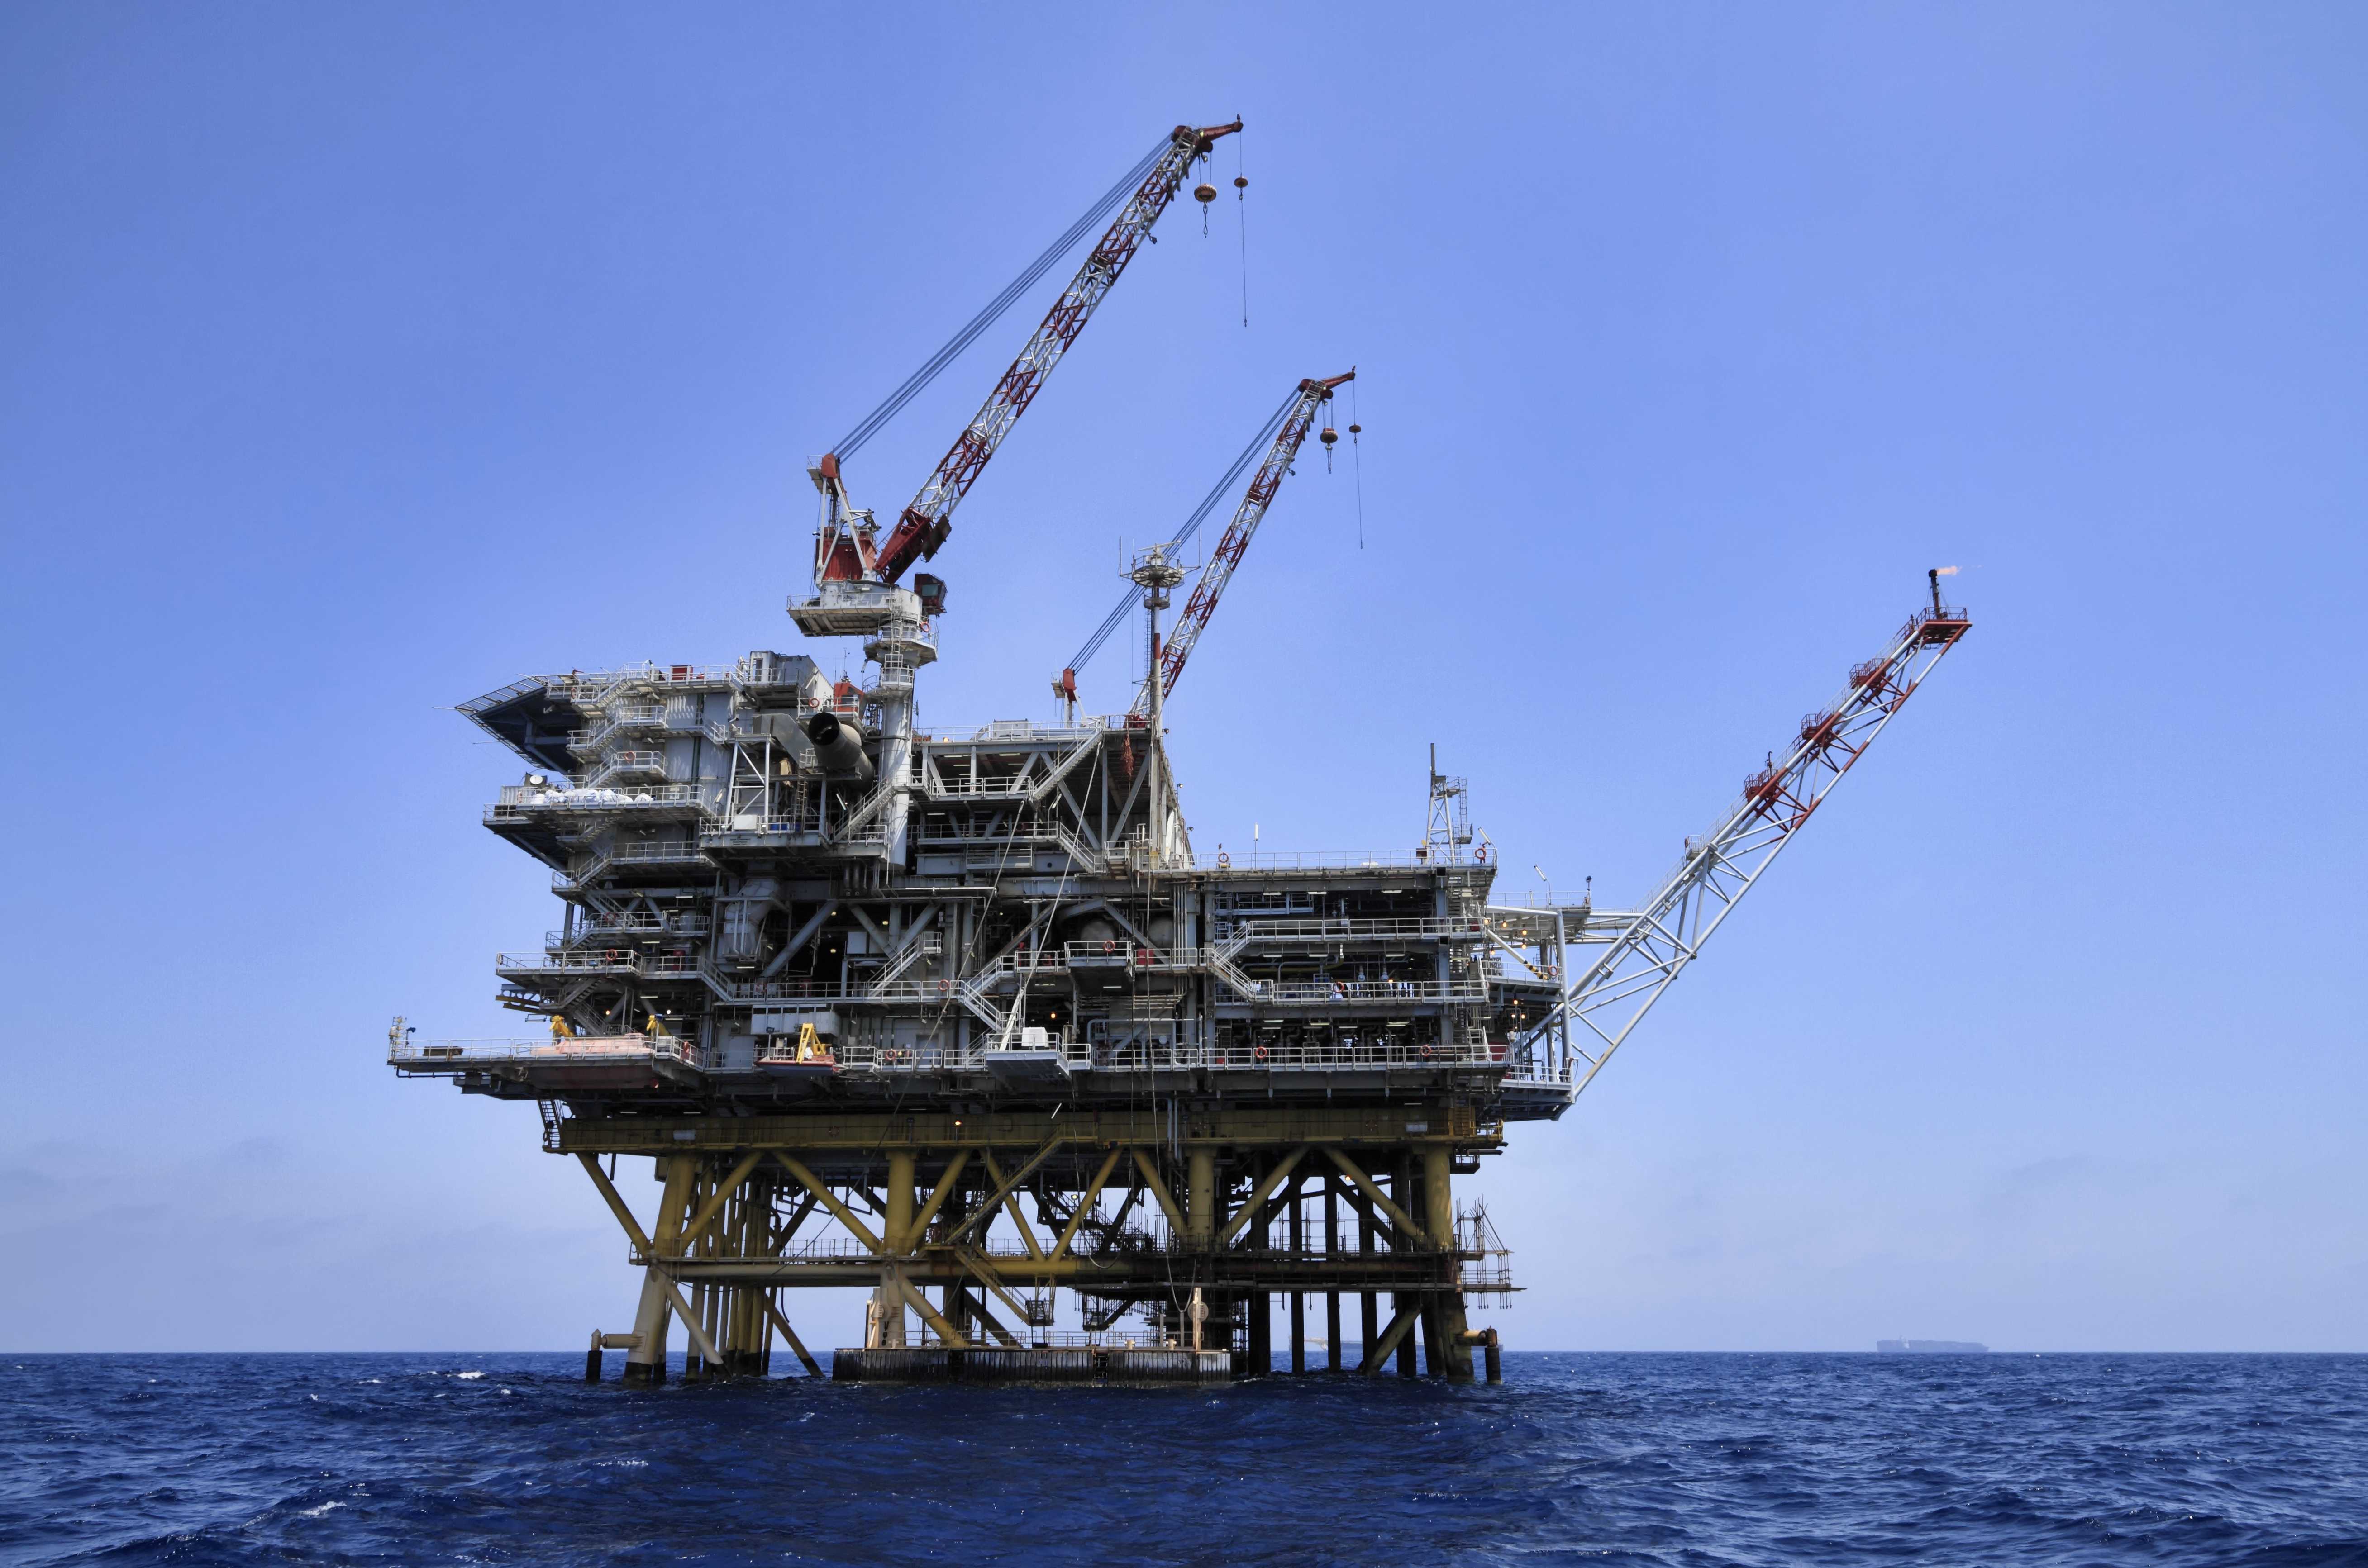 An oil rig offshore platform.